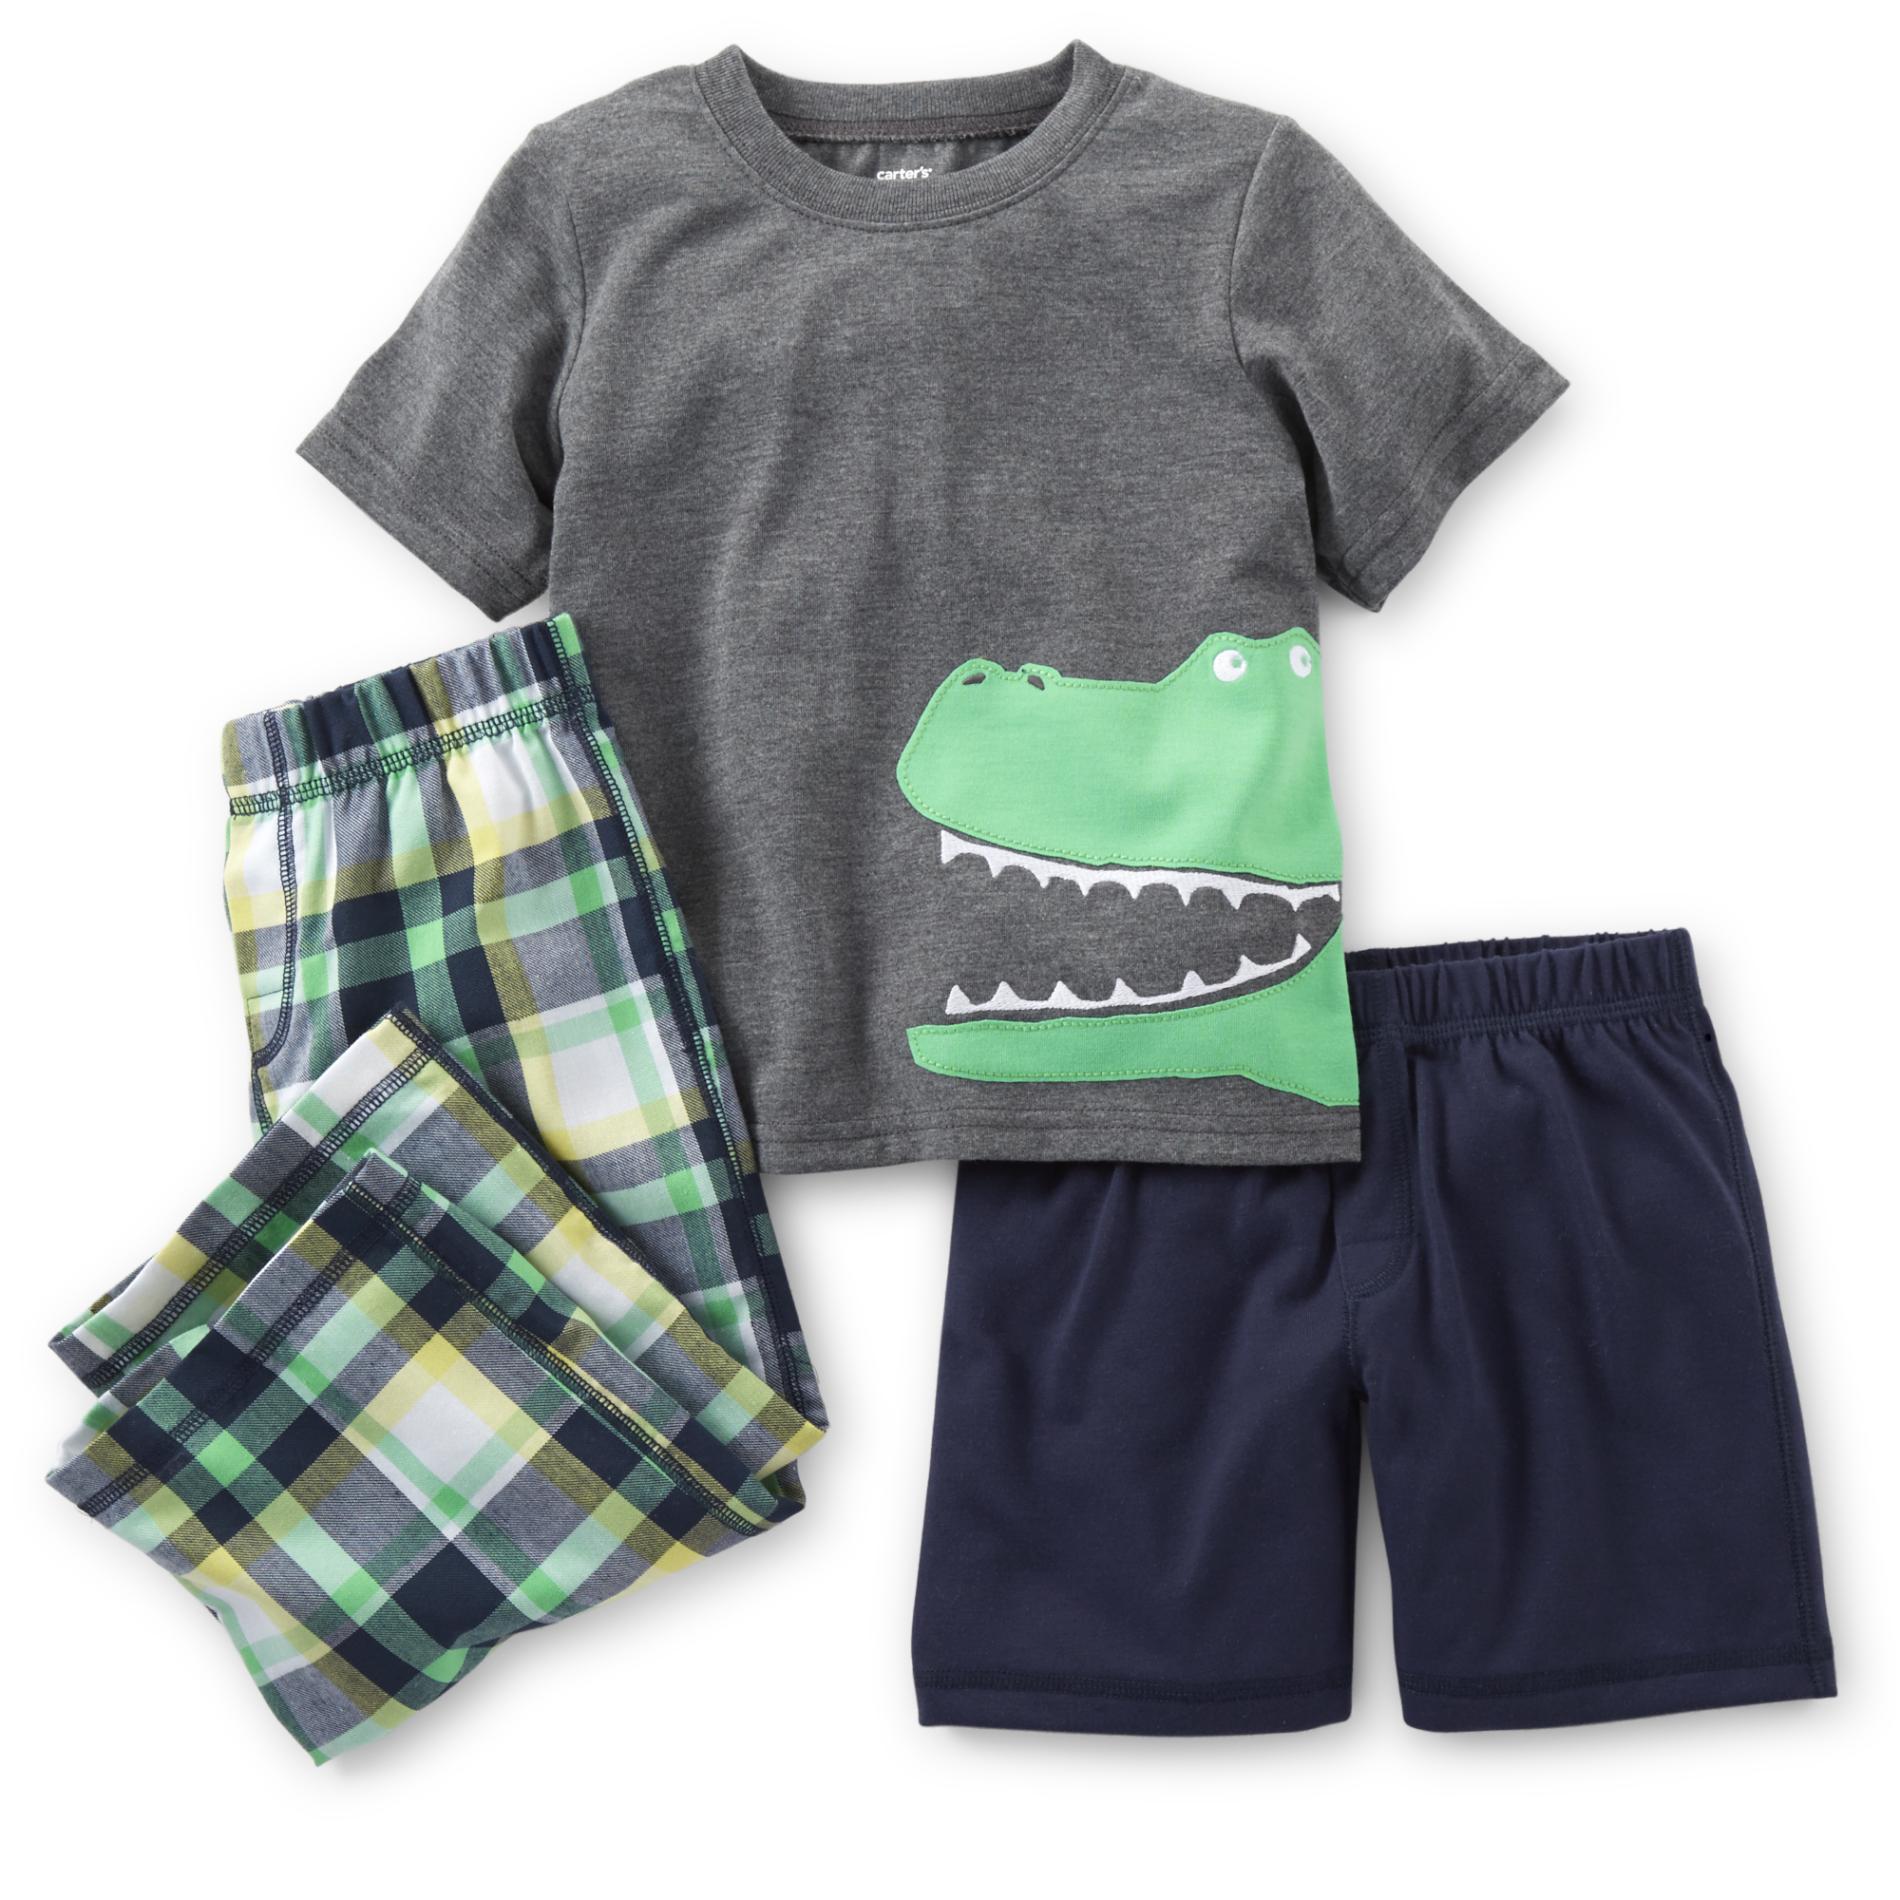 Carter's Infant Boy's 3-Piece Pajamas - Gator